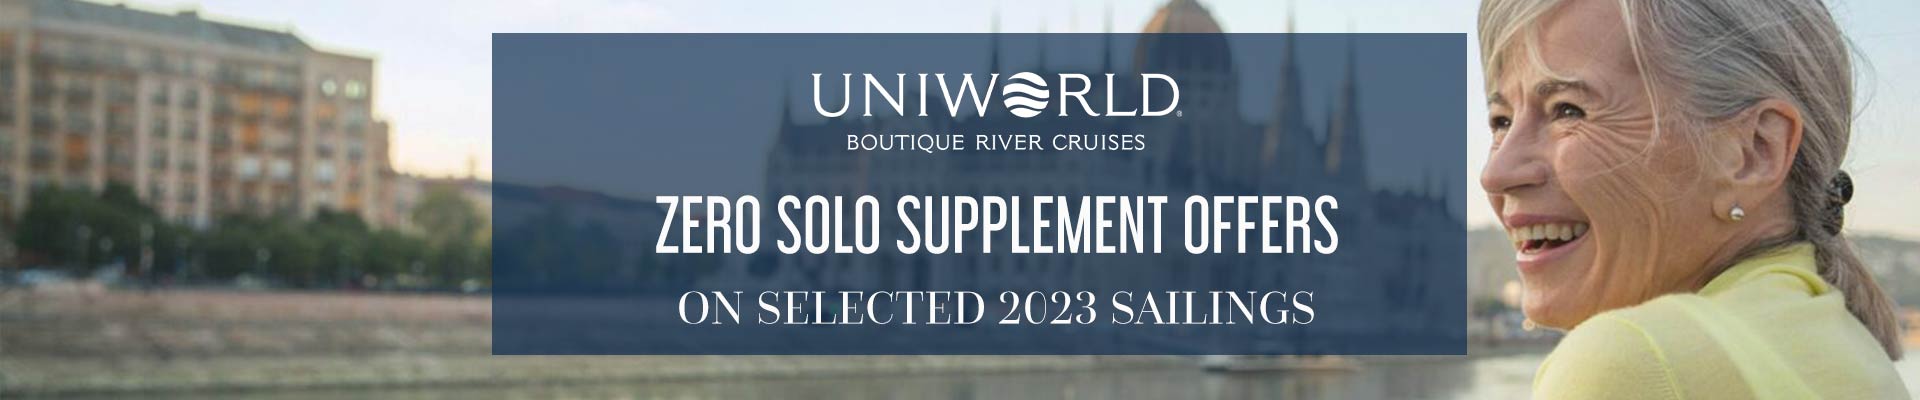 Uniworld Zero Solo Supplement River Cruises